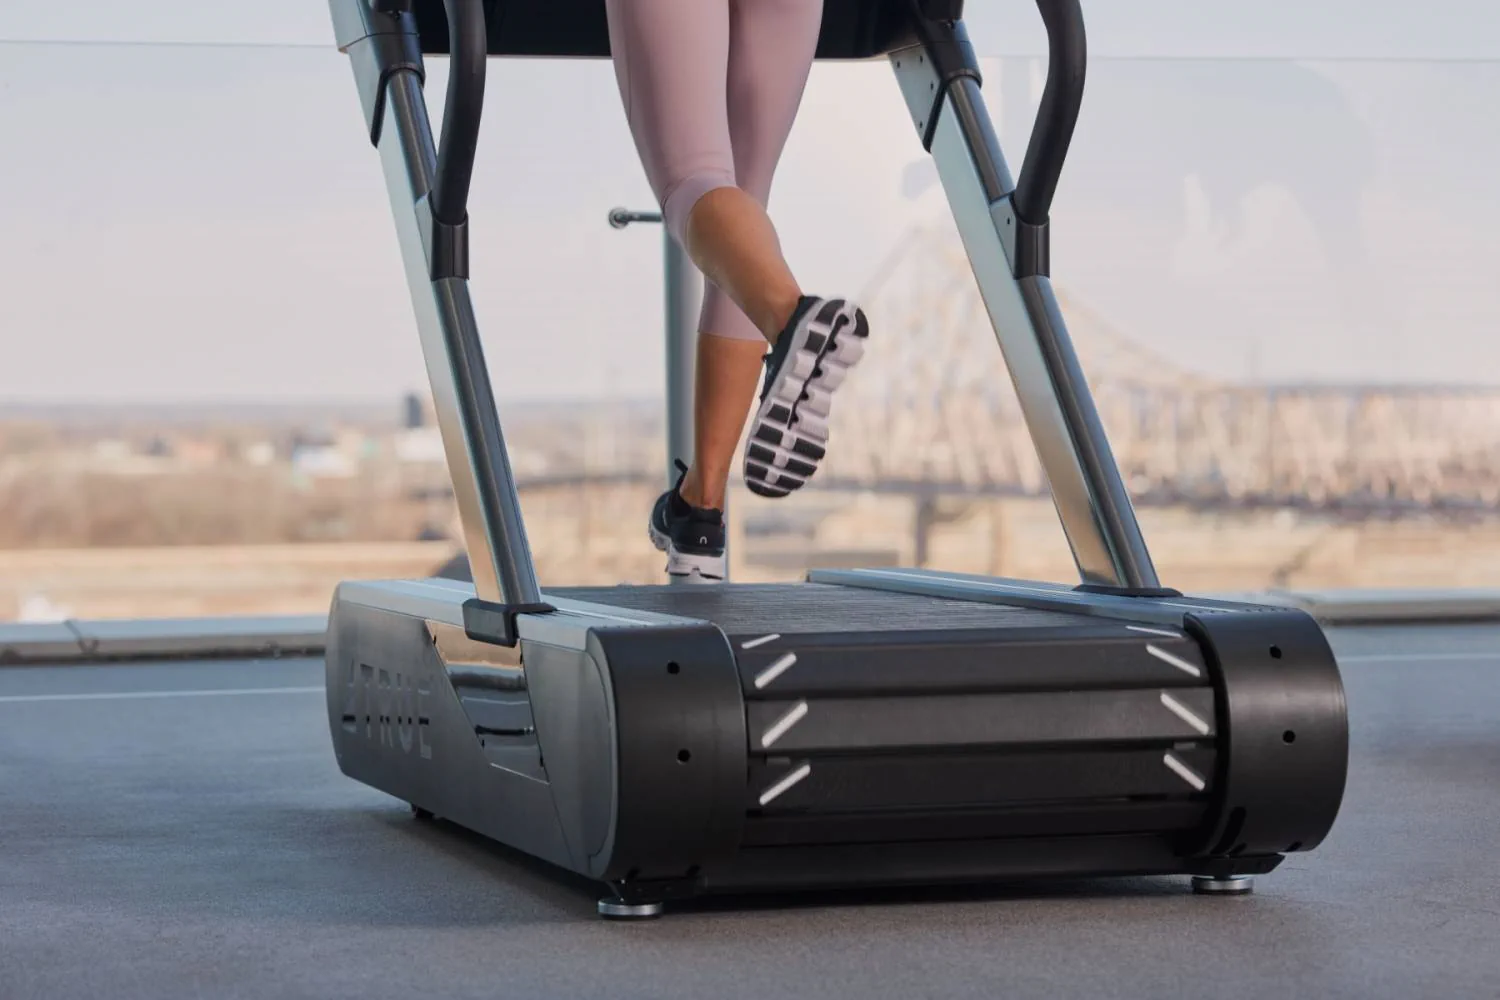 Woman on treadmill